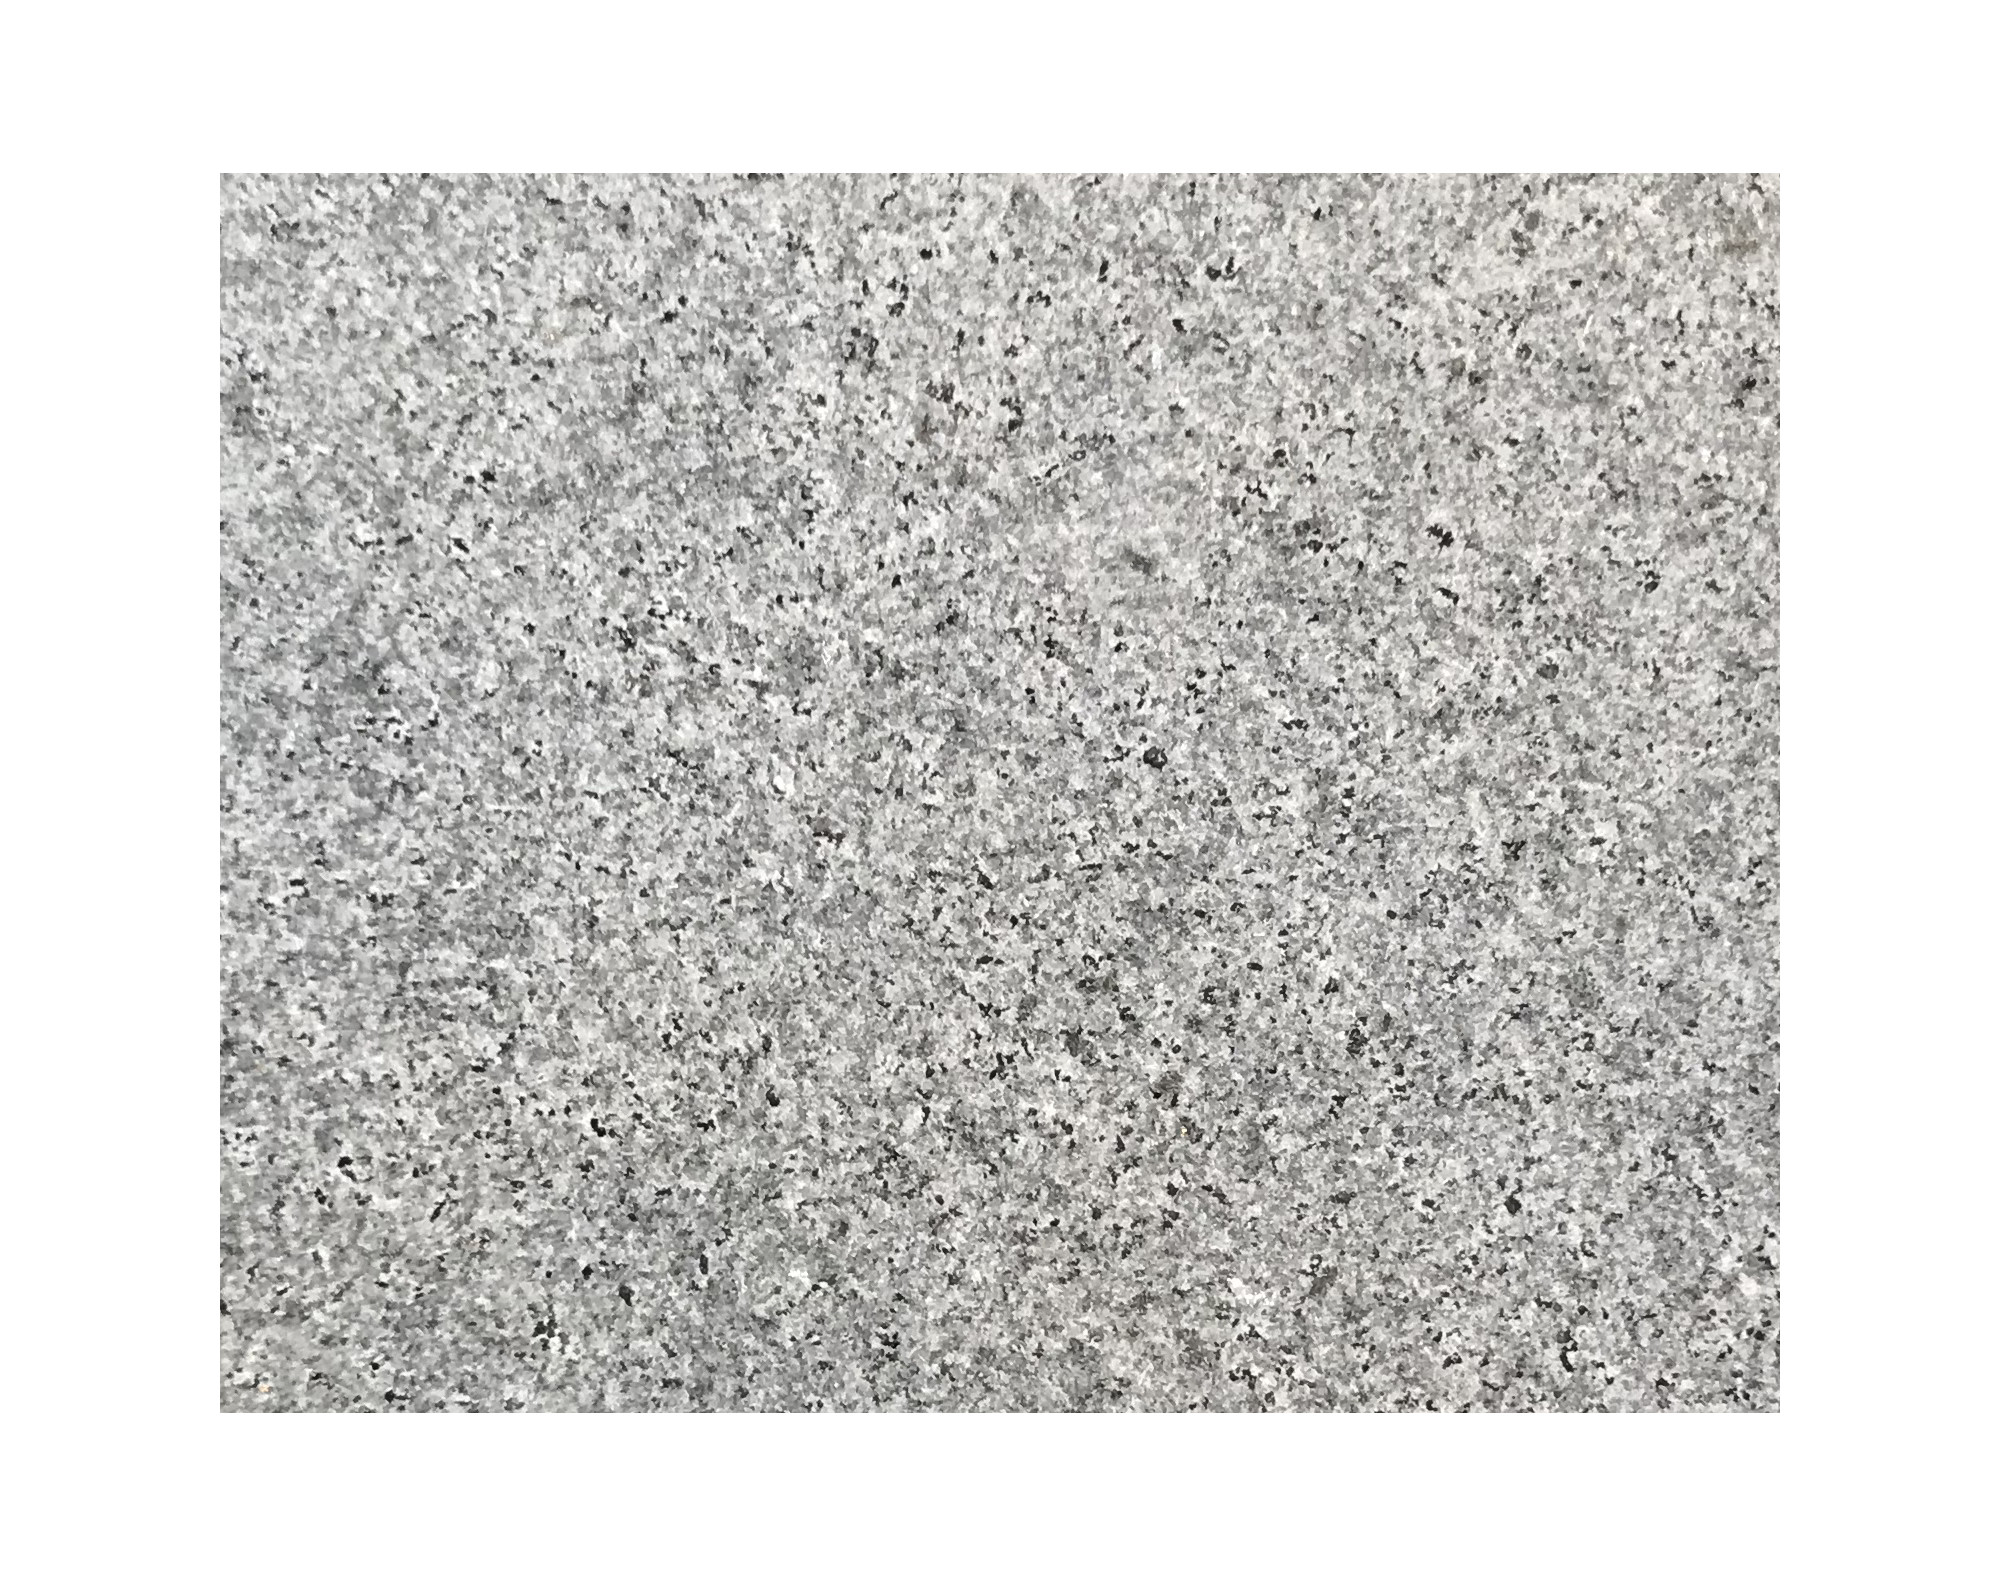 Harmo roc napoliset, natura-serie, ovaal d:3,00mx5,70m, berggrijs, graniet